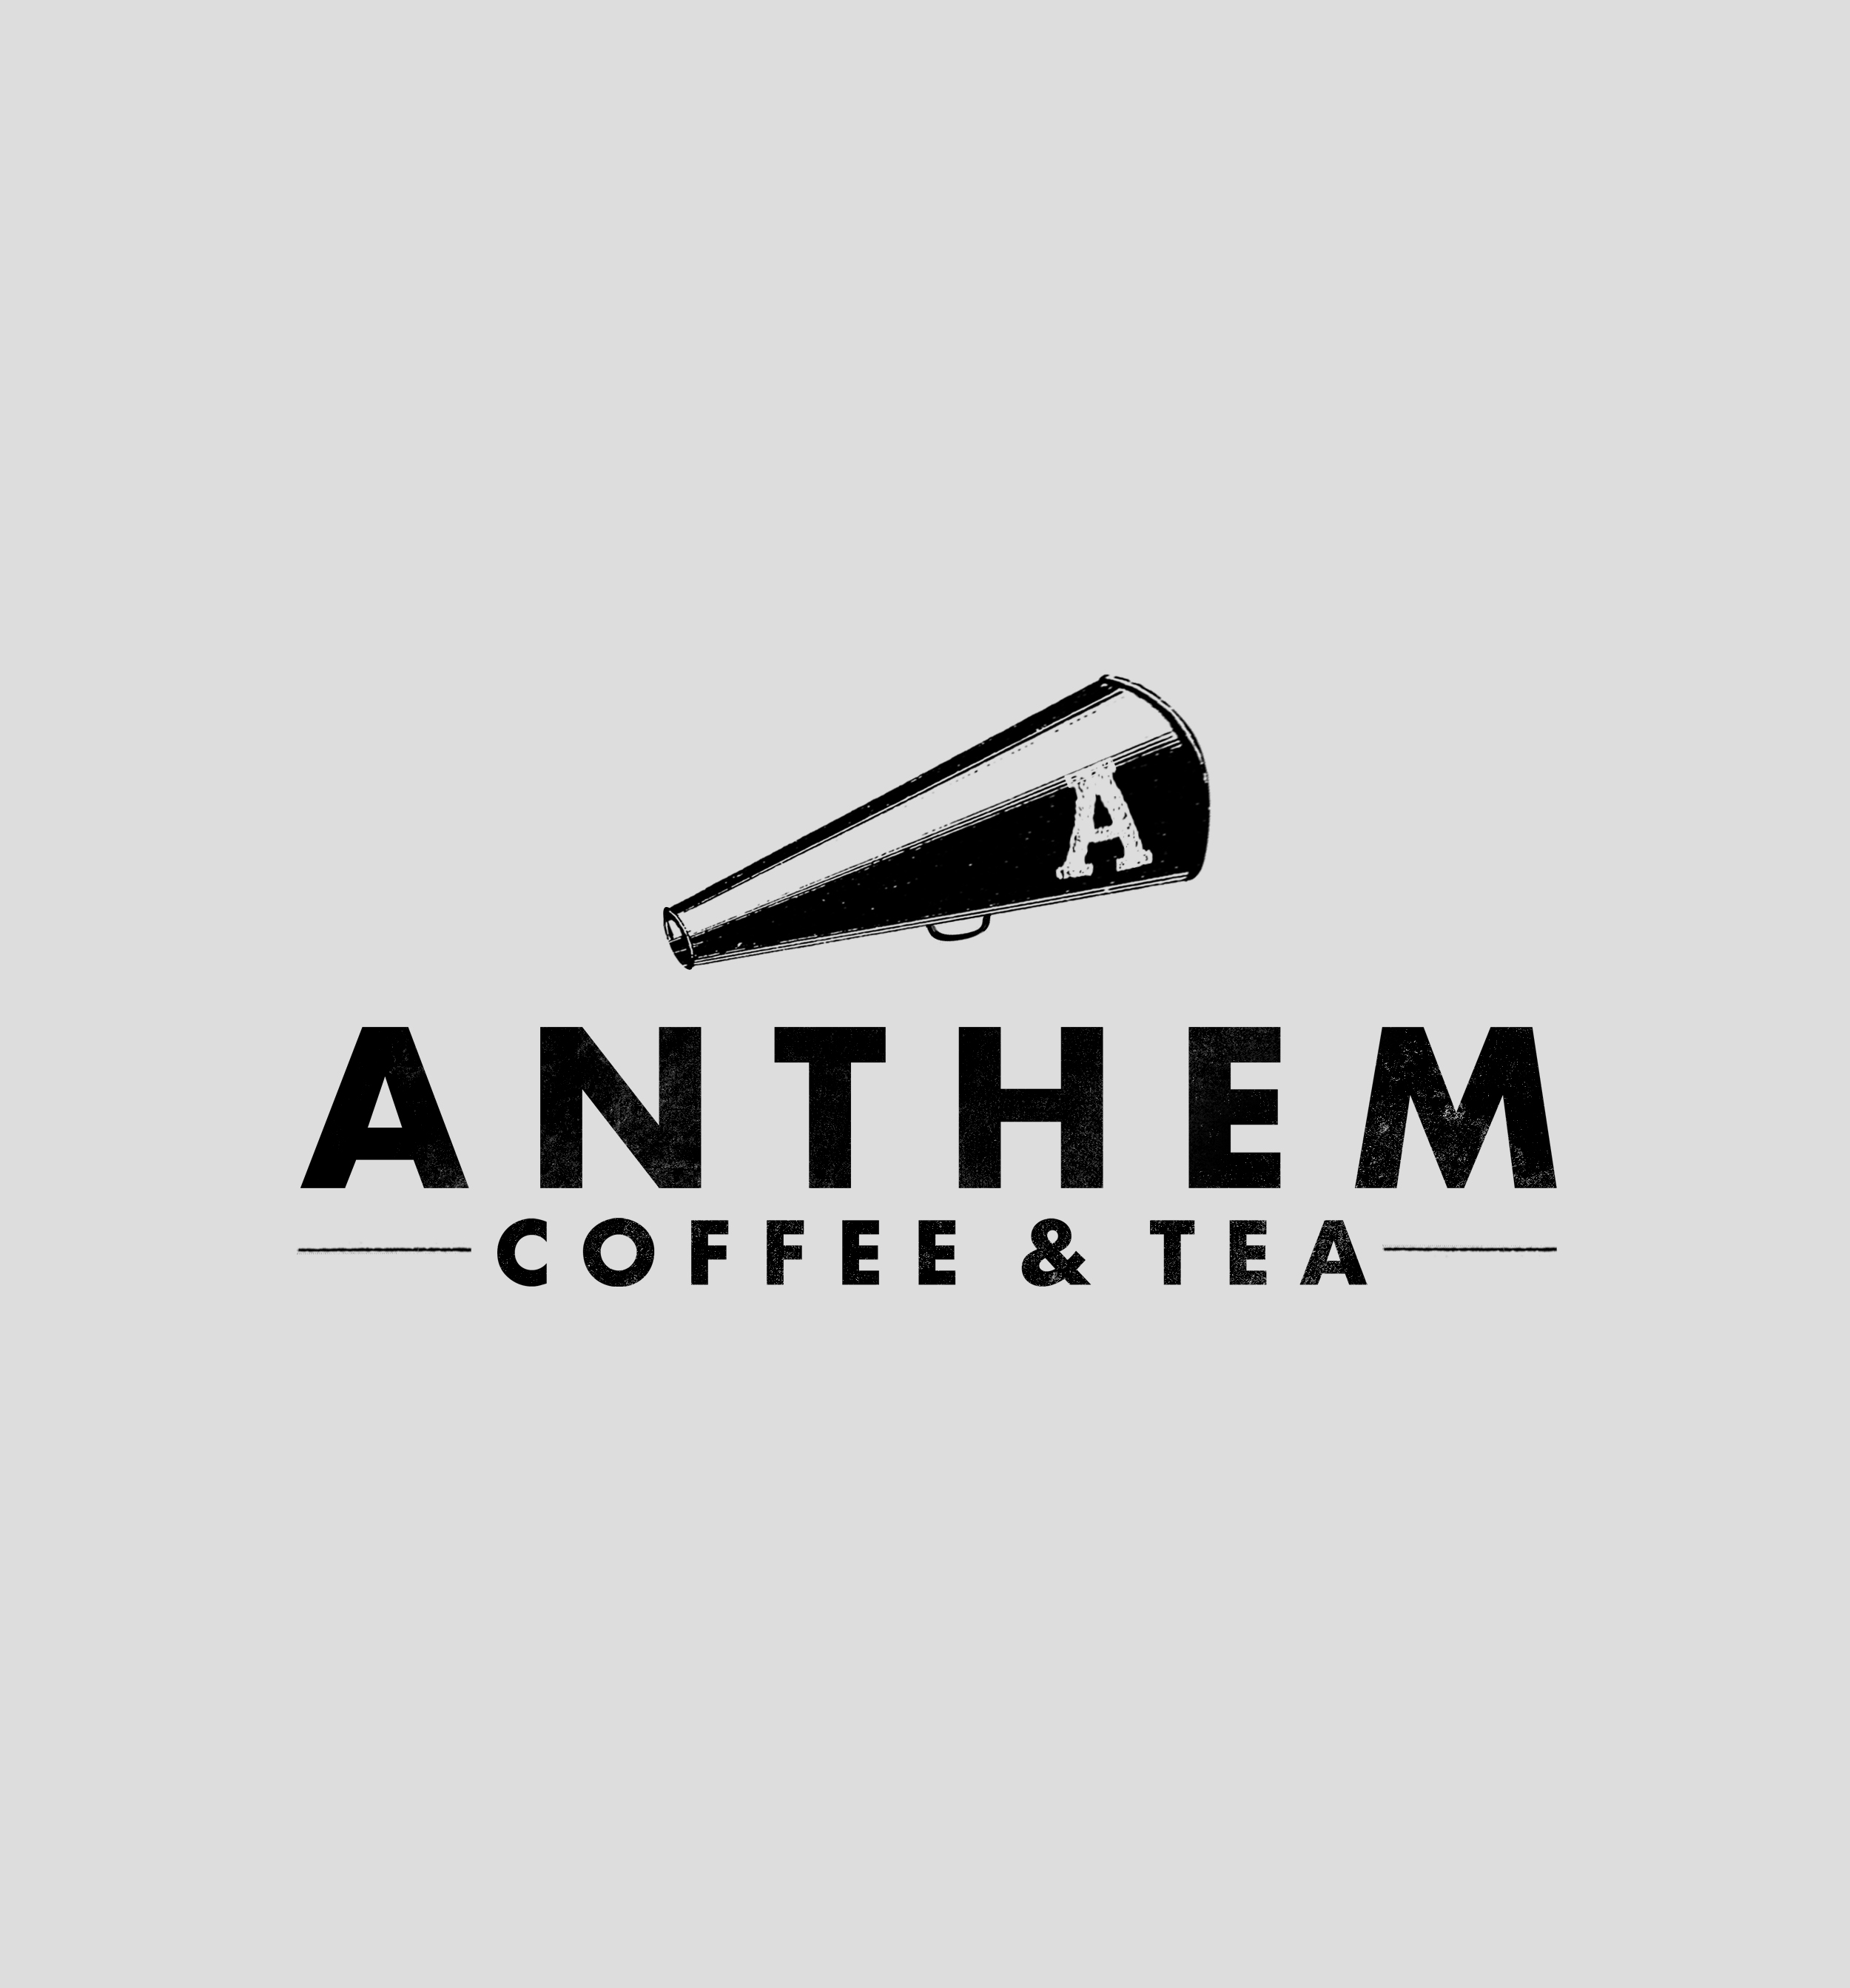 ANTHEM Coffee & Tea